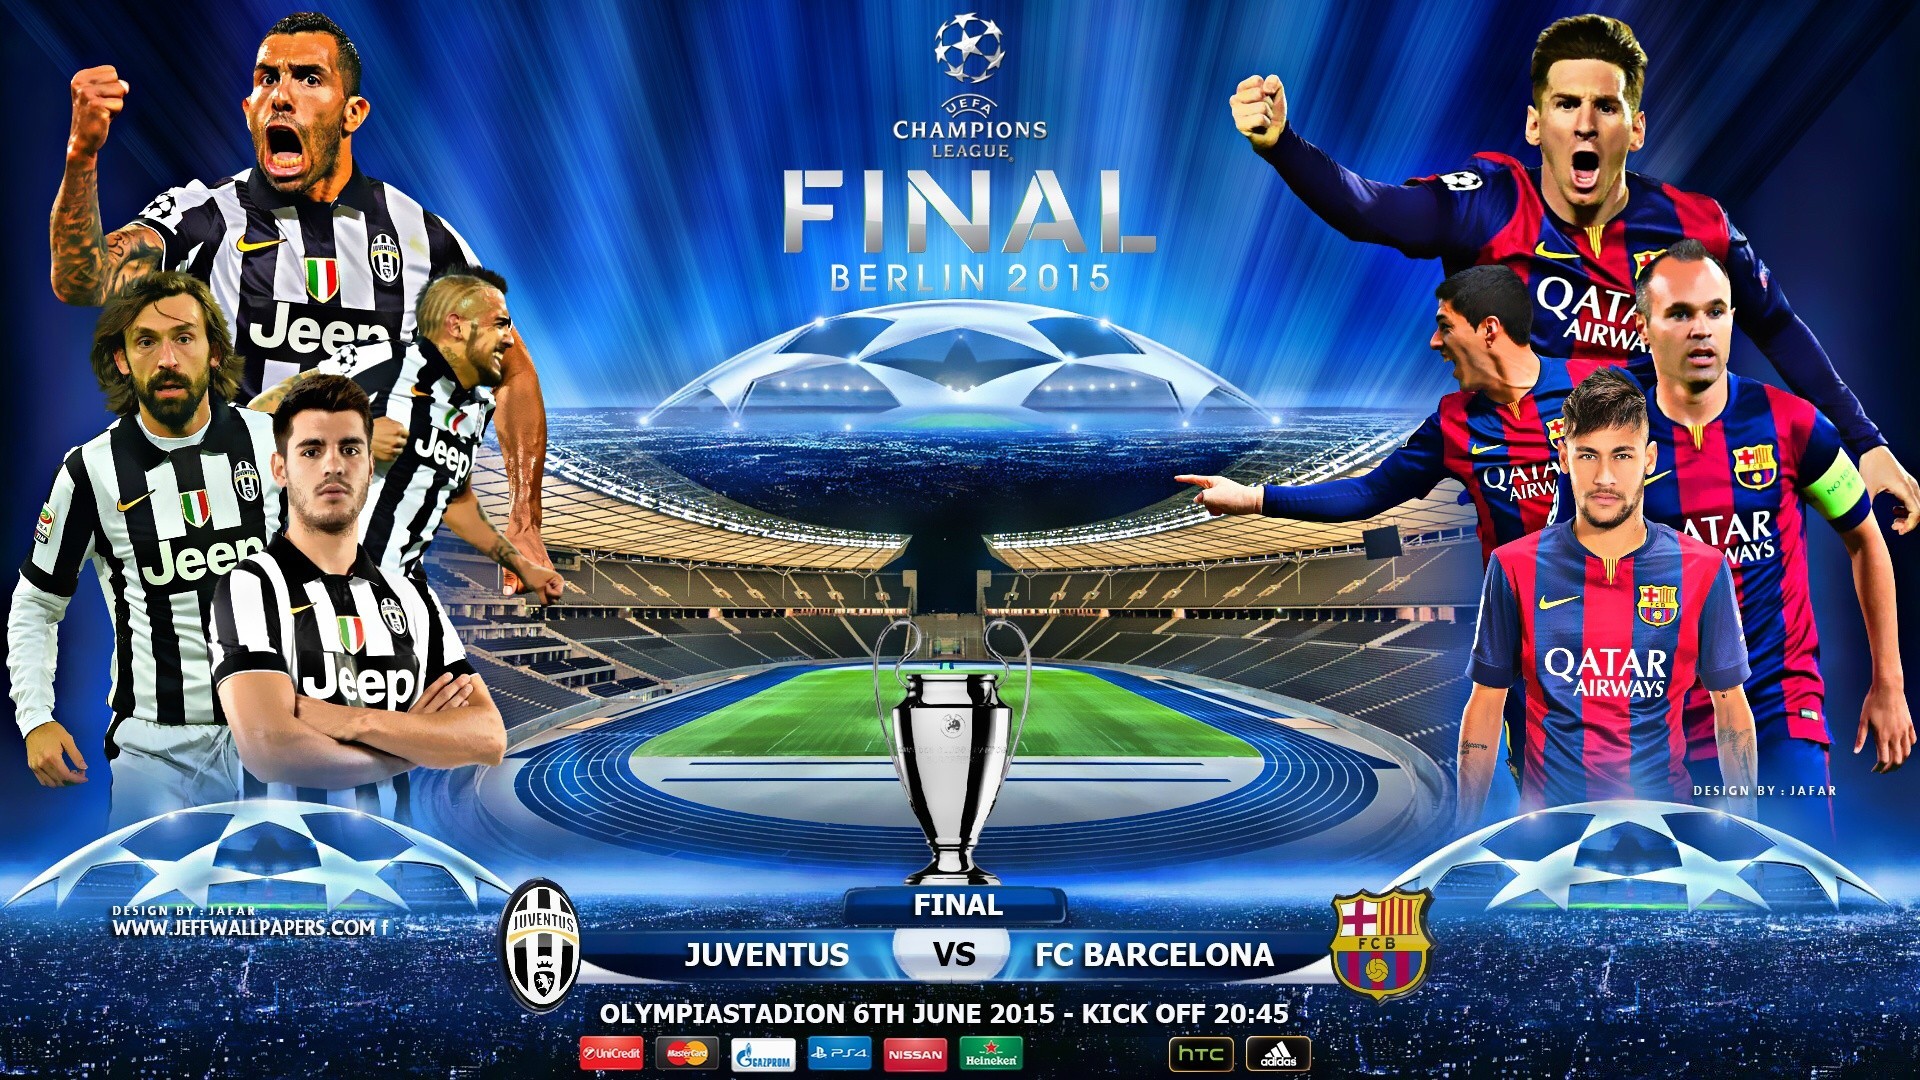 Ювентус - Барселона финал Лиги чемпионов - обои на Андроид ...